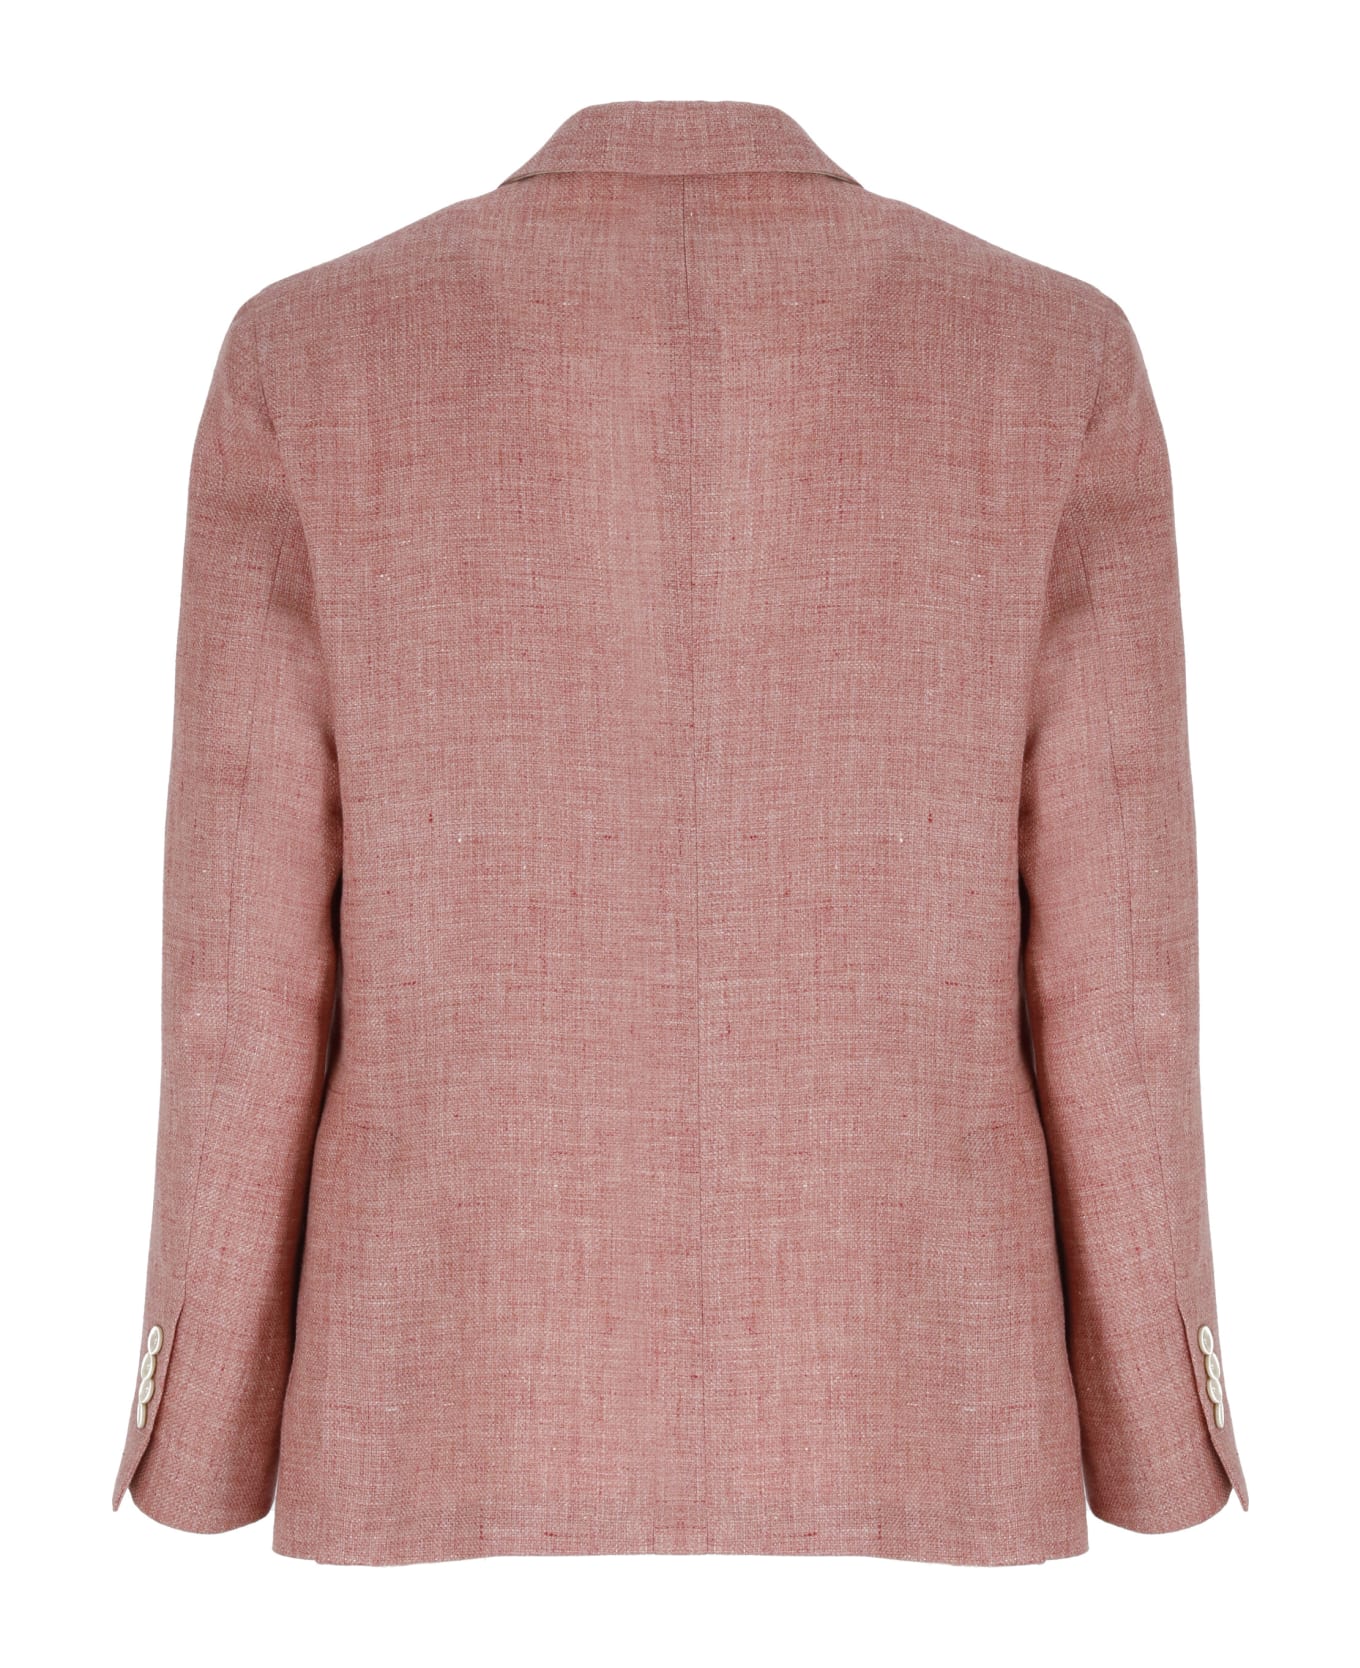 Lardini Linen And Cotton Jacket - Pink